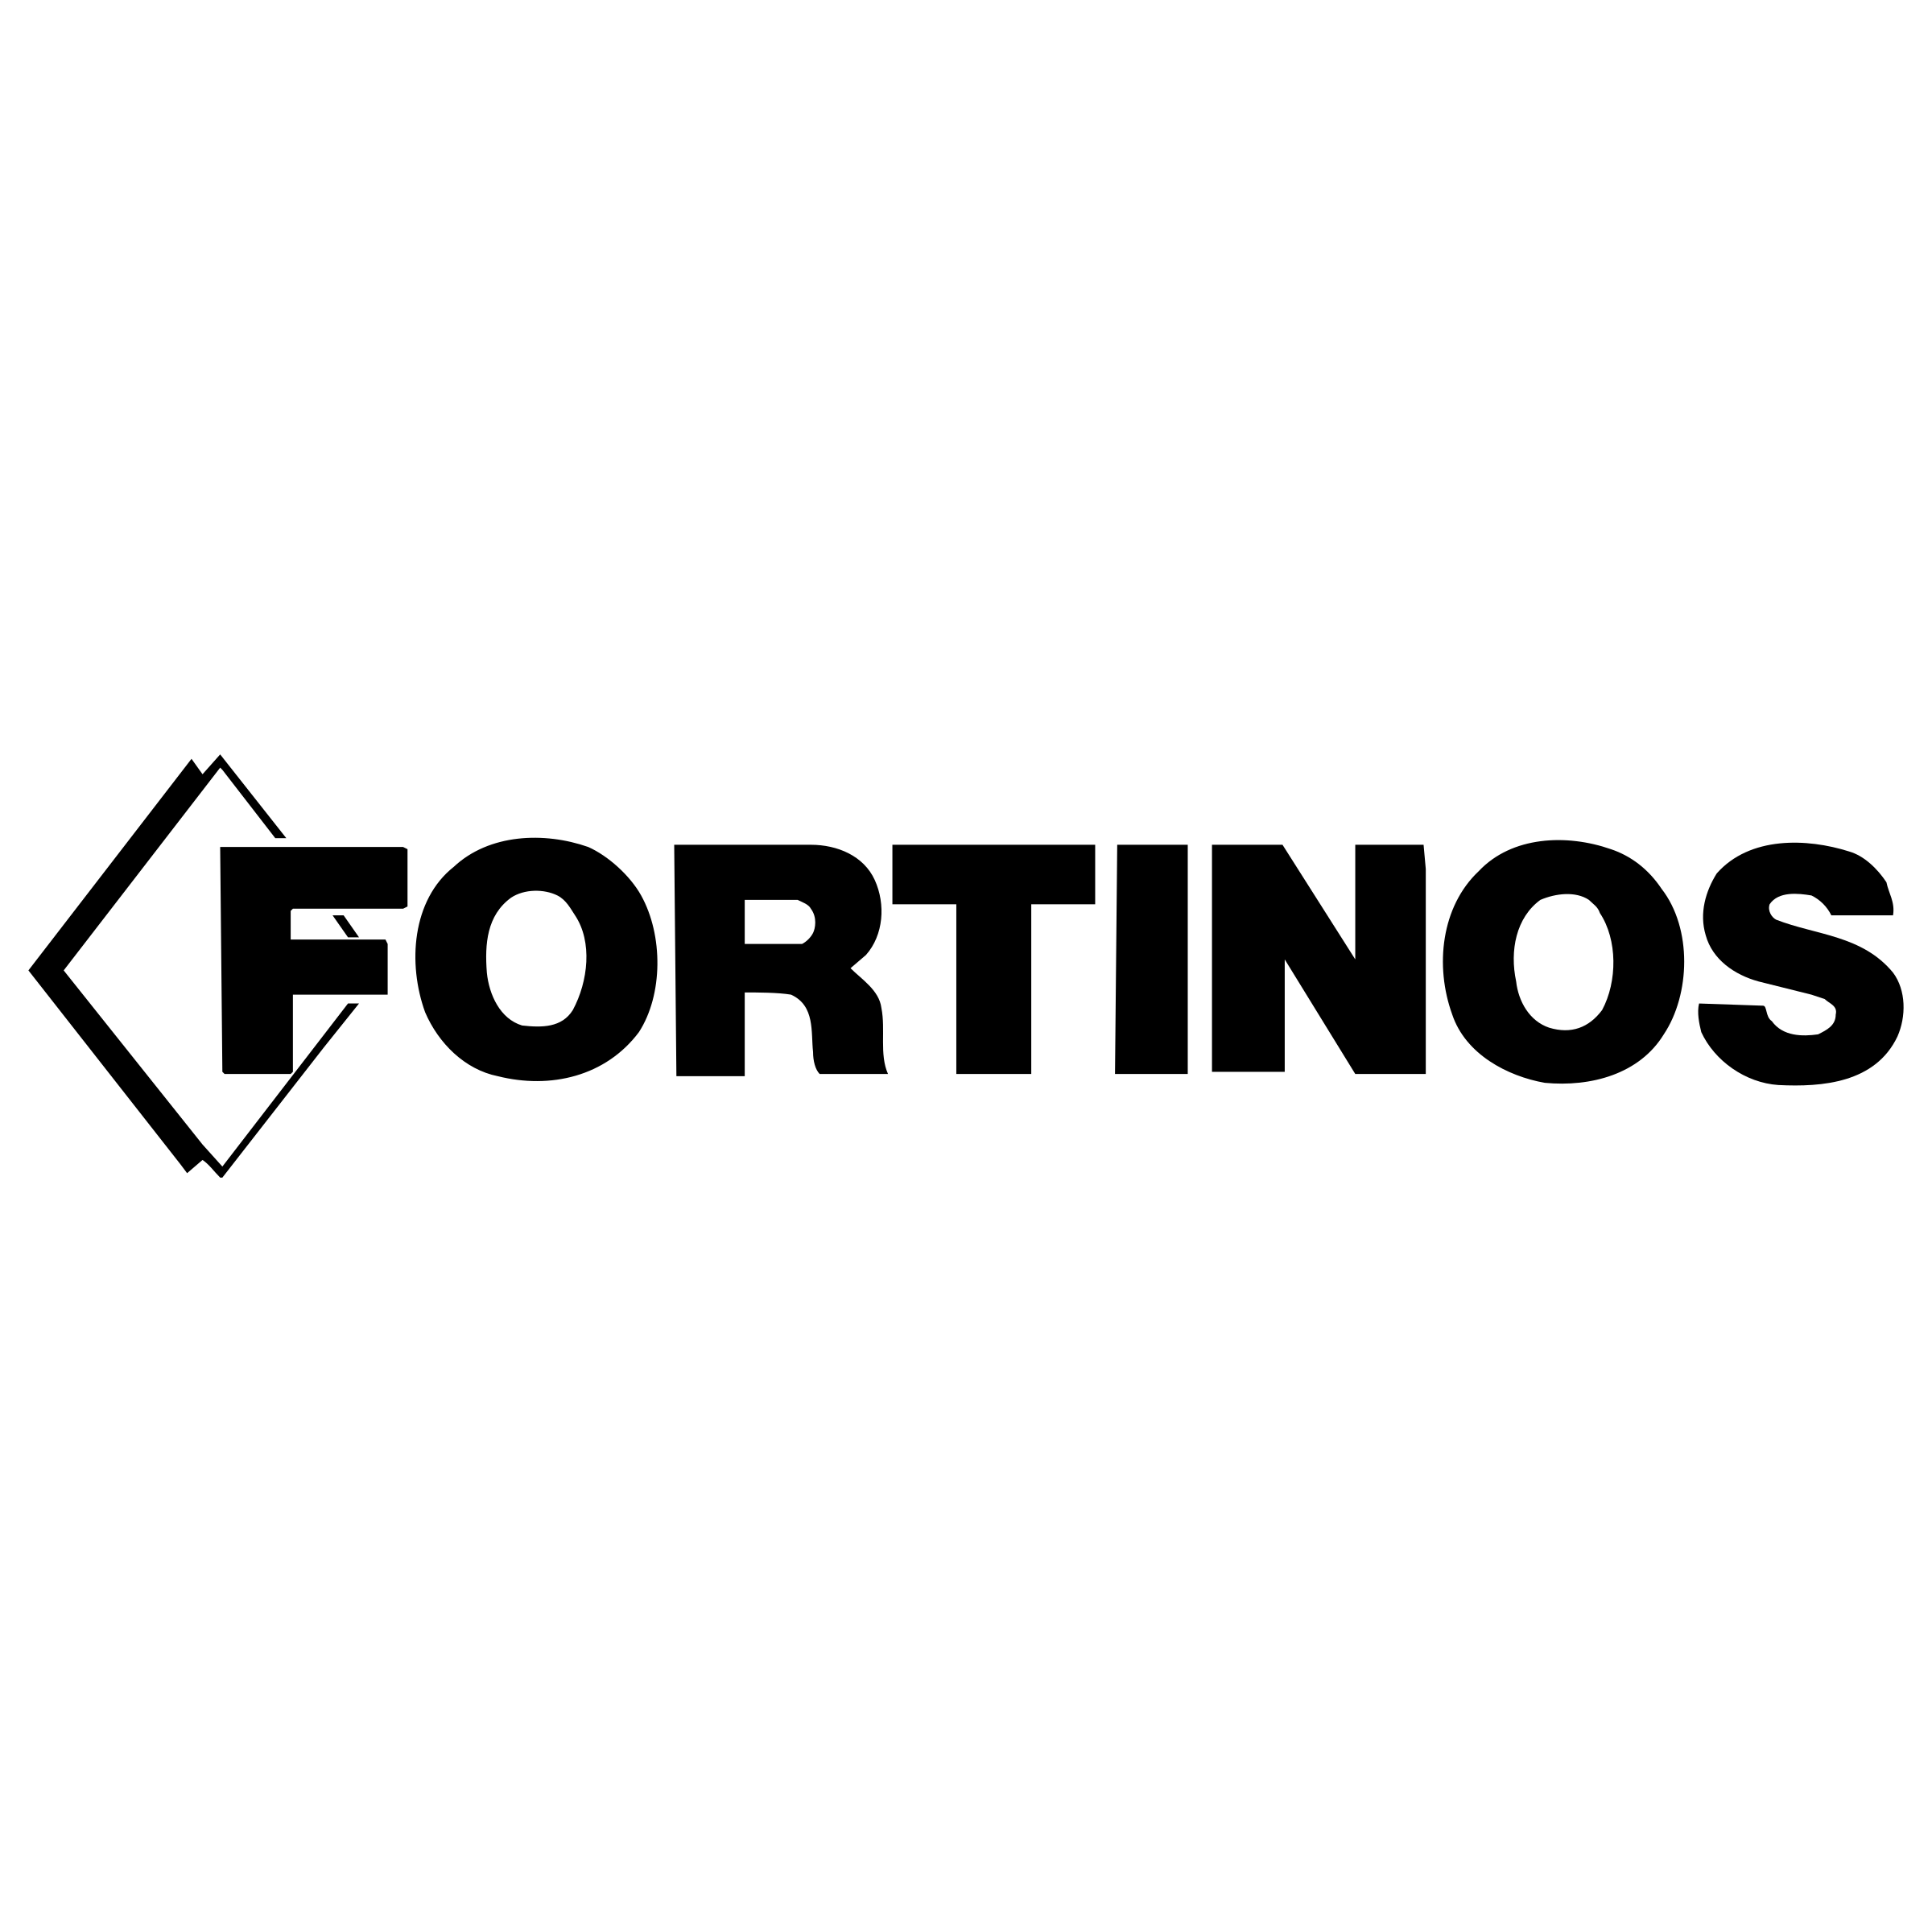 Fortinos Logo - Fortinos Logo PNG Transparent & SVG Vector